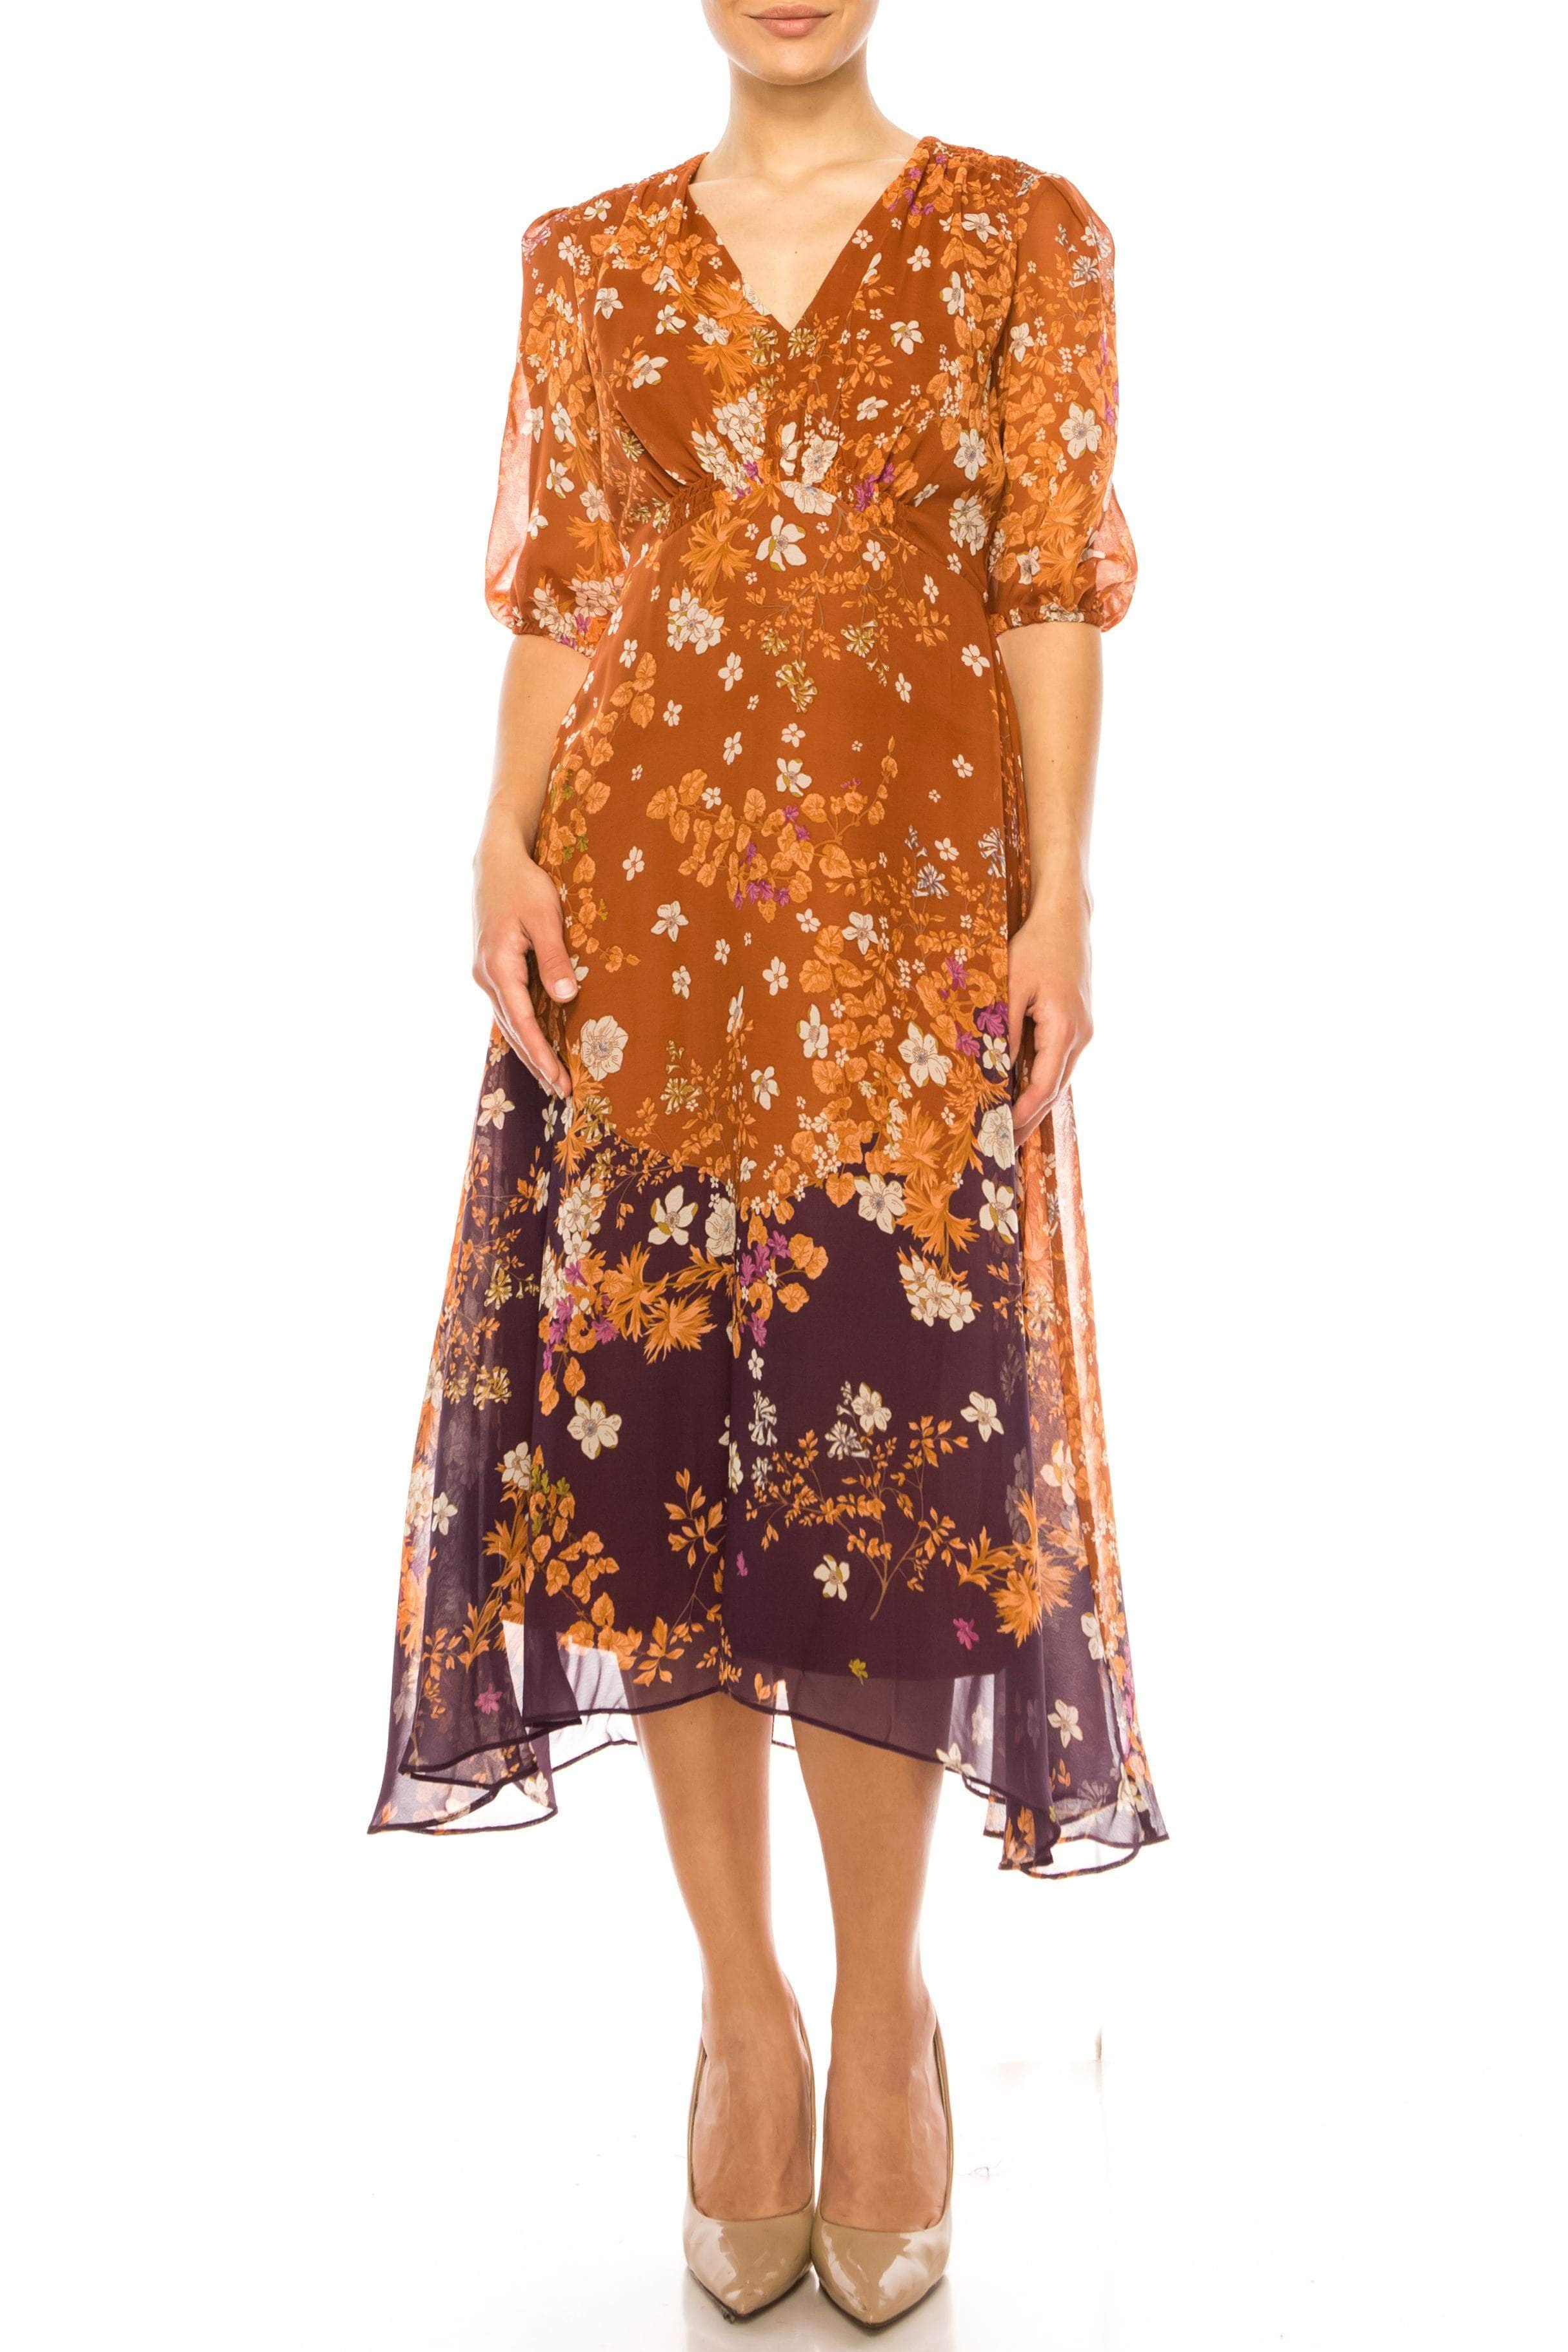 Maison Tara 96036M - Floral Printed Knee-Length Formal Dress
